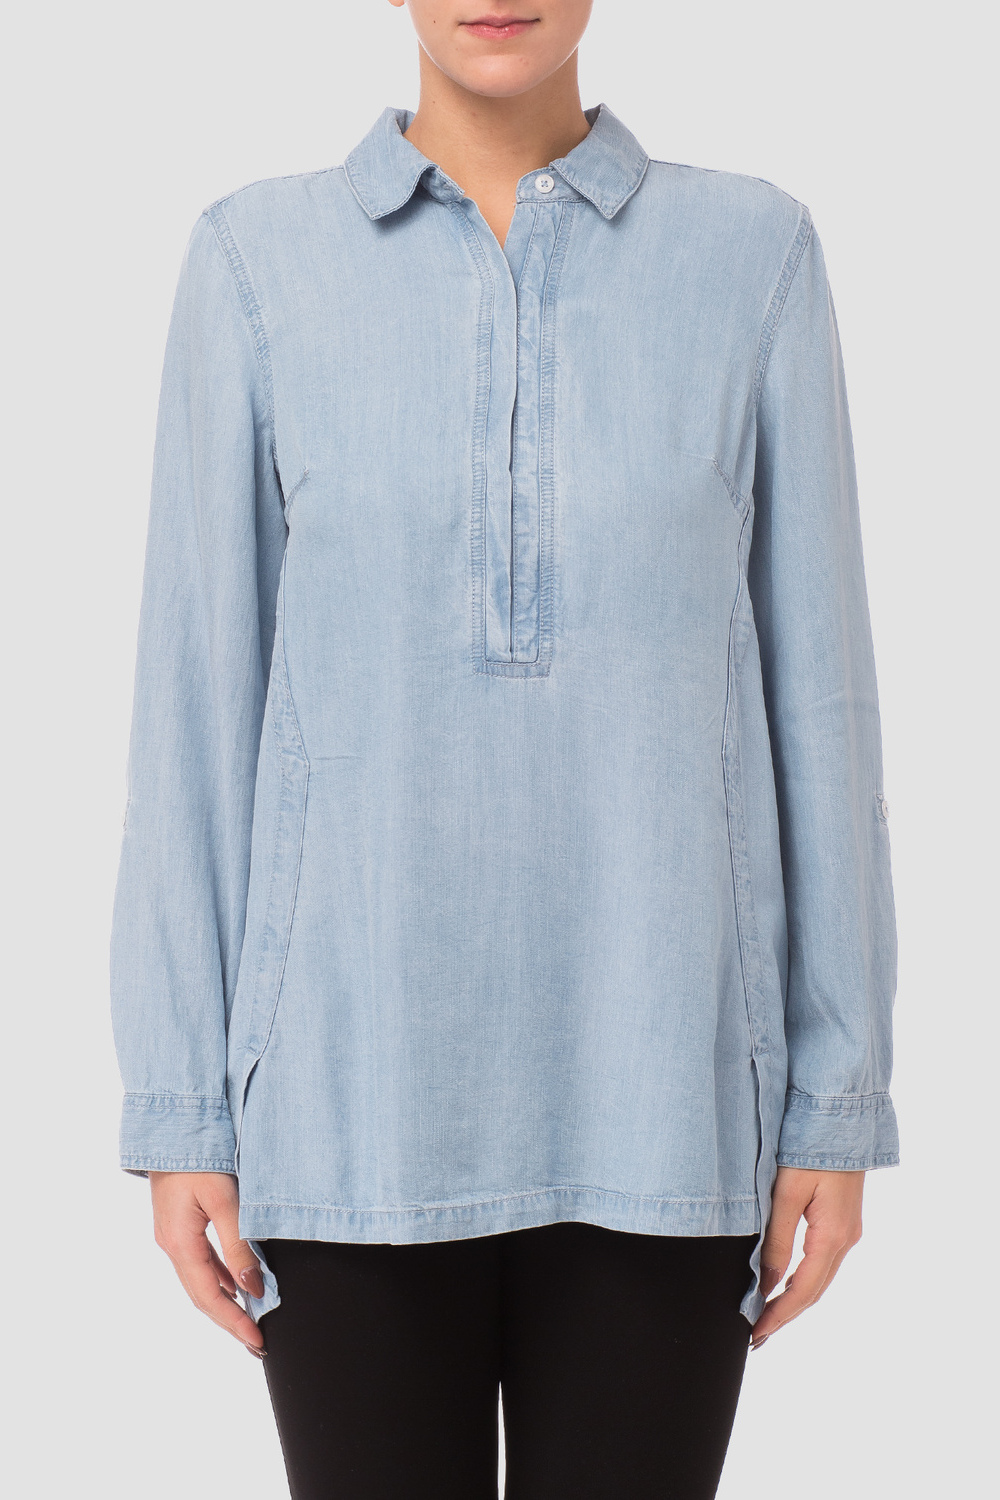 Joseph Ribkoff blouse style 181950. Denim Bleu Pâle